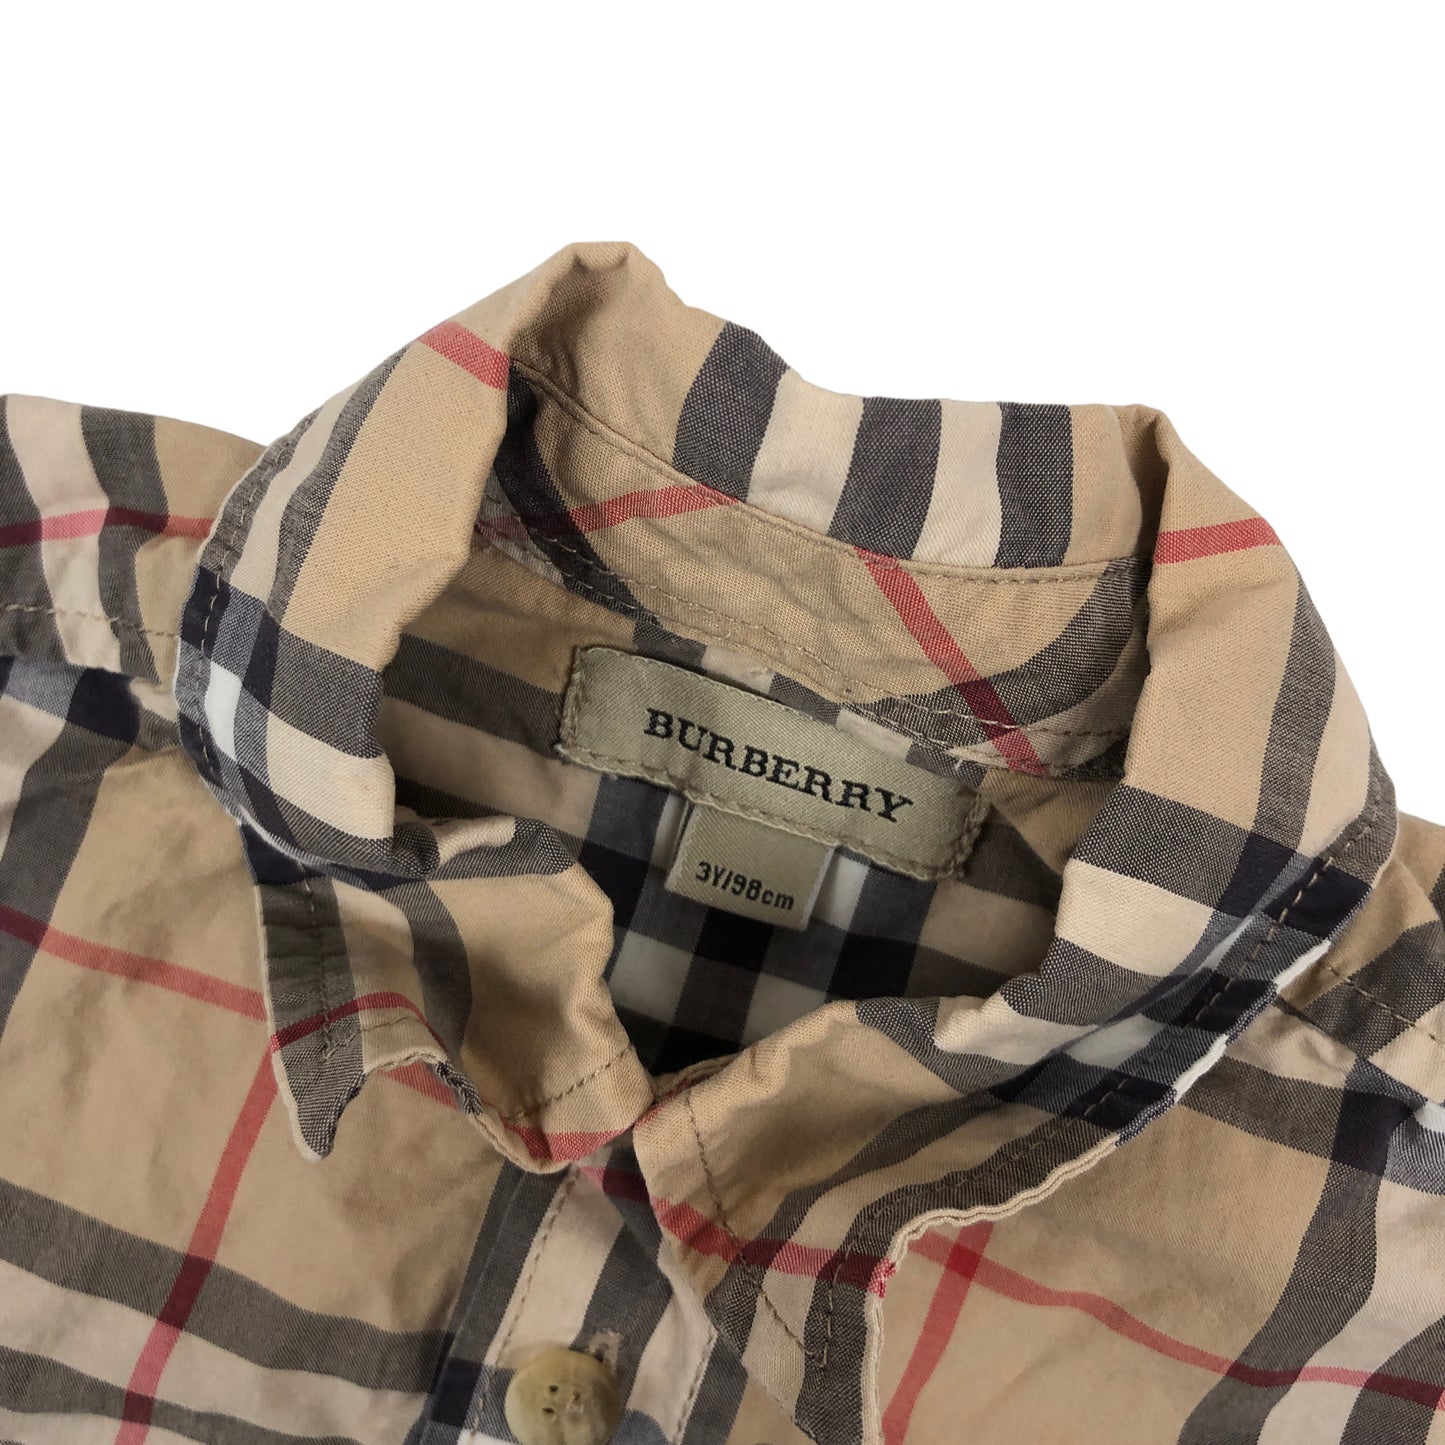 Vintage Nova Check Burberry Shirt (Age 3)